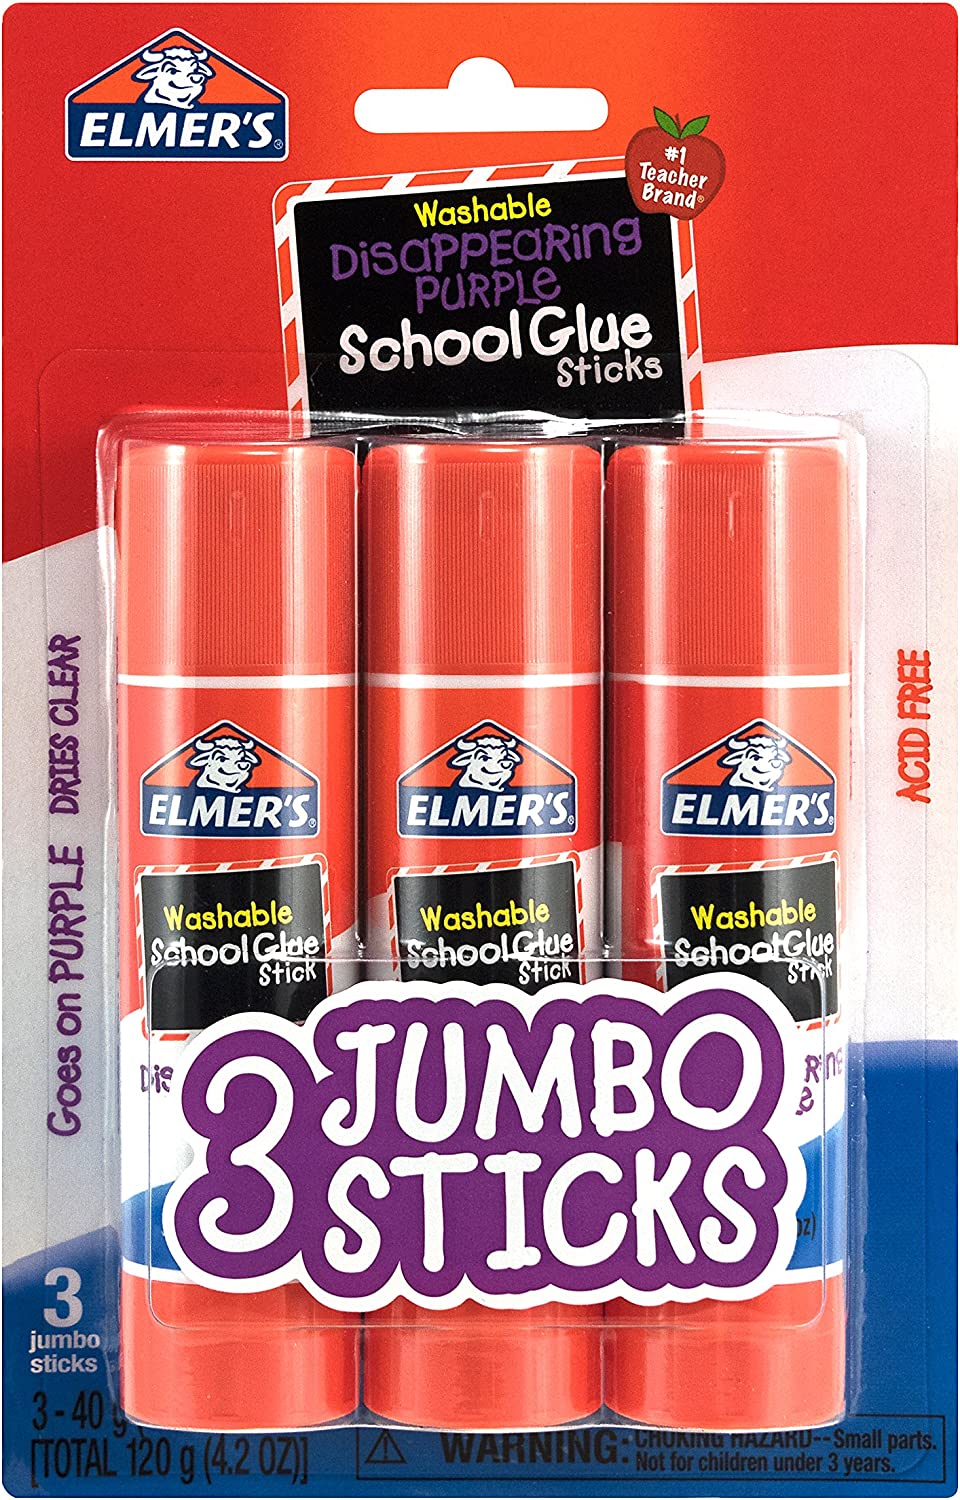 Elmer's All Purpose School Glue Sticks, Washable, 6g, 8 Count (E5004), White